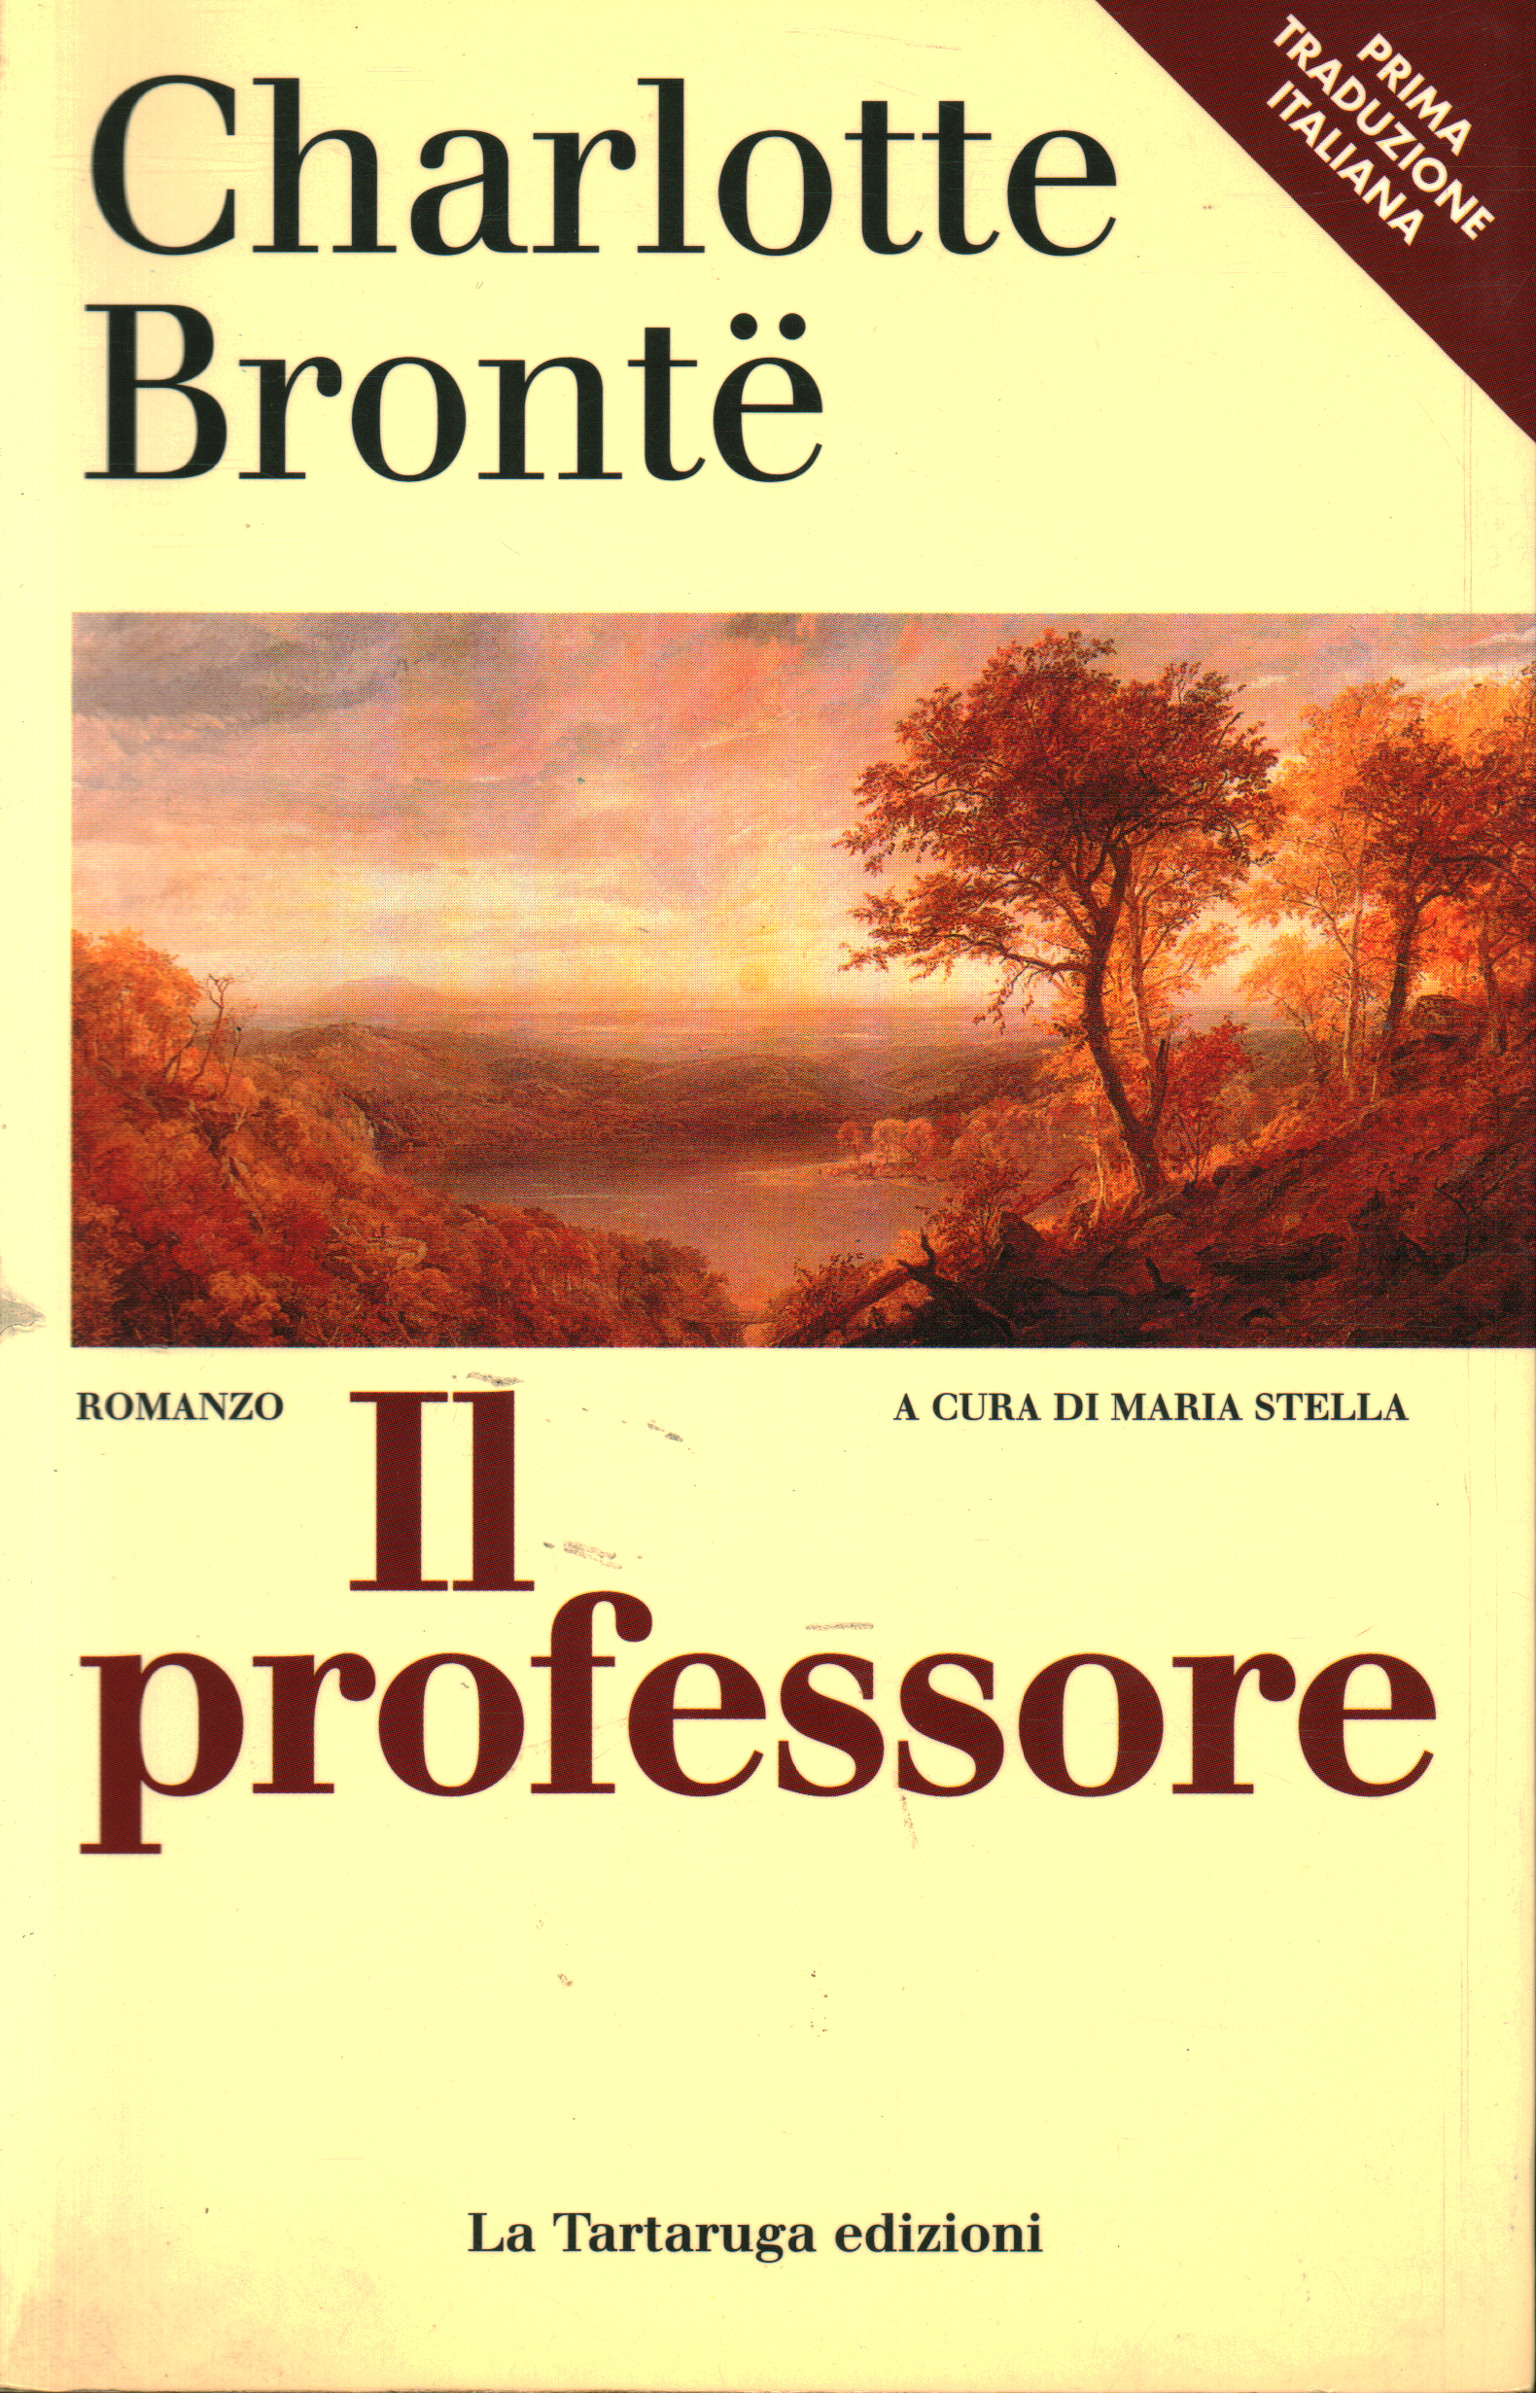 The professor, Charlotte Brontë